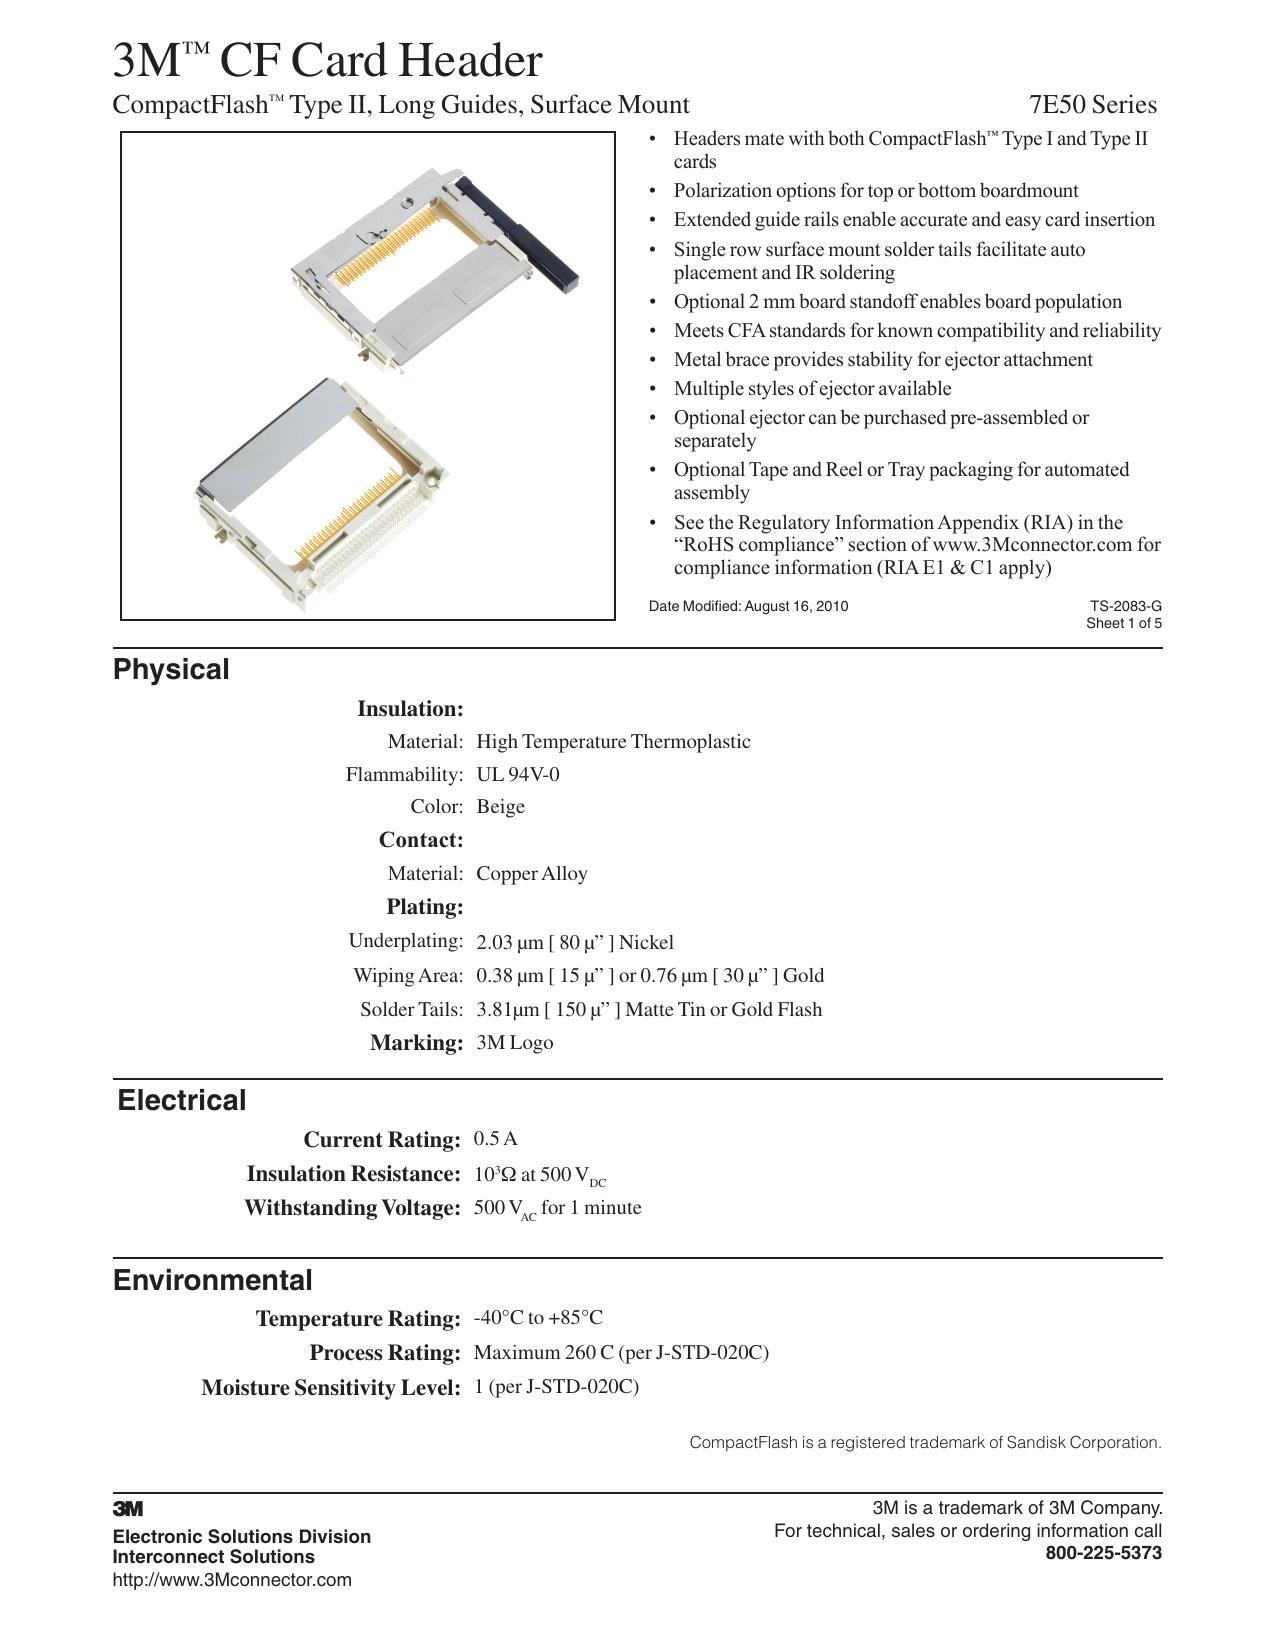 3m-cf-card-header-compactflash-type-ii-long-guides-surface-mount-7eso-series.pdf